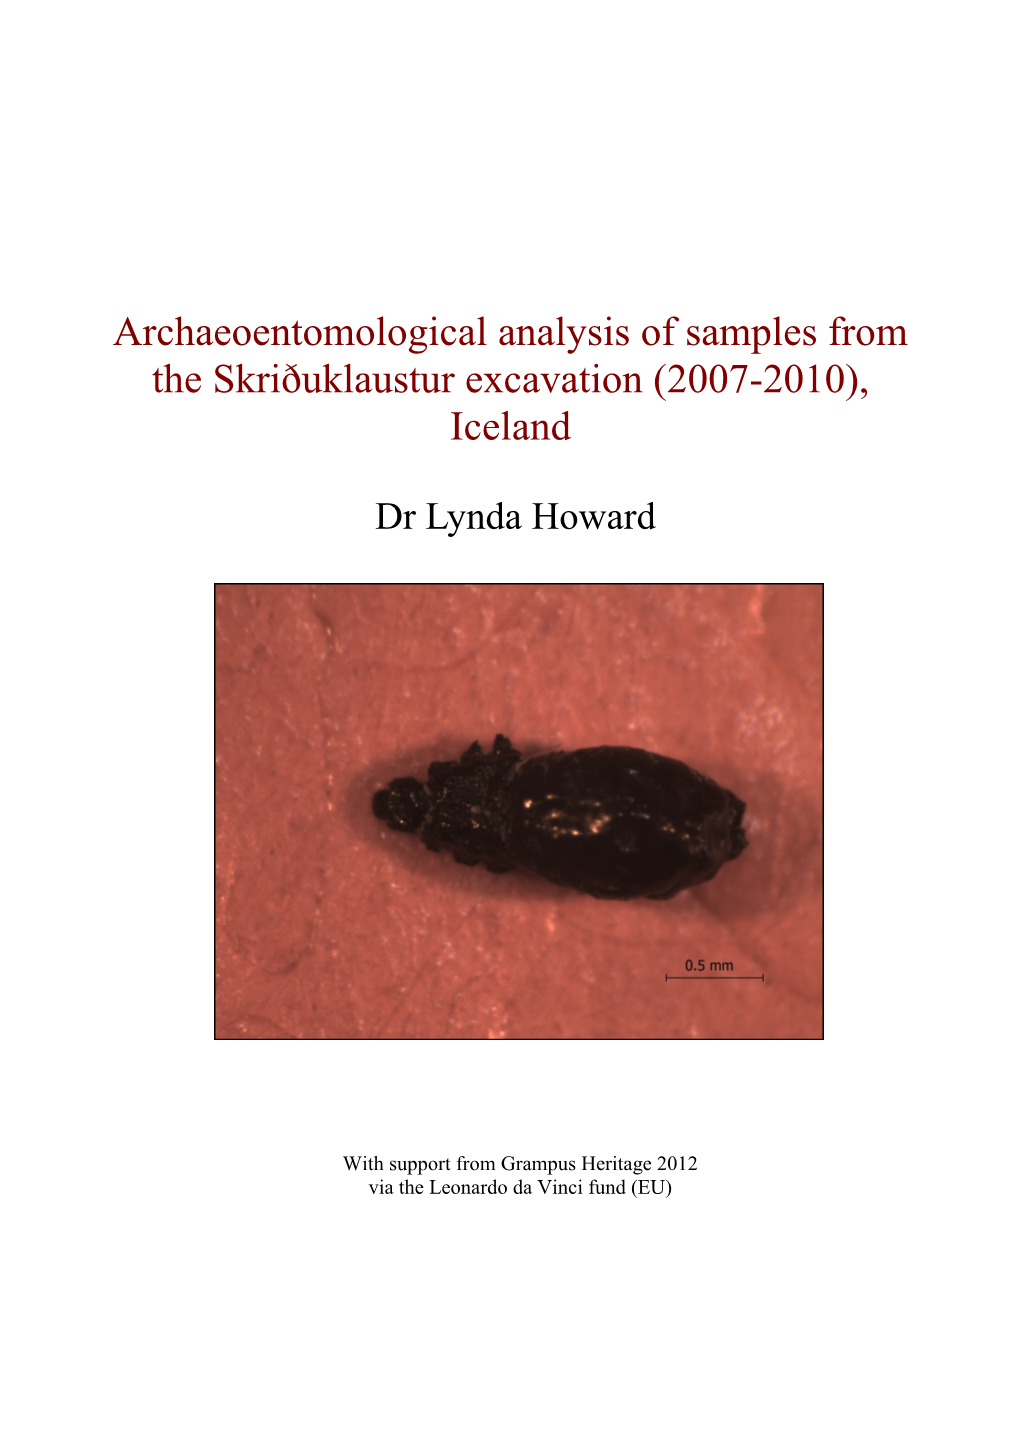 Archaeoentomological Analysis of Samples from the Skriðuklaustur Excavation (2007-2010), Iceland